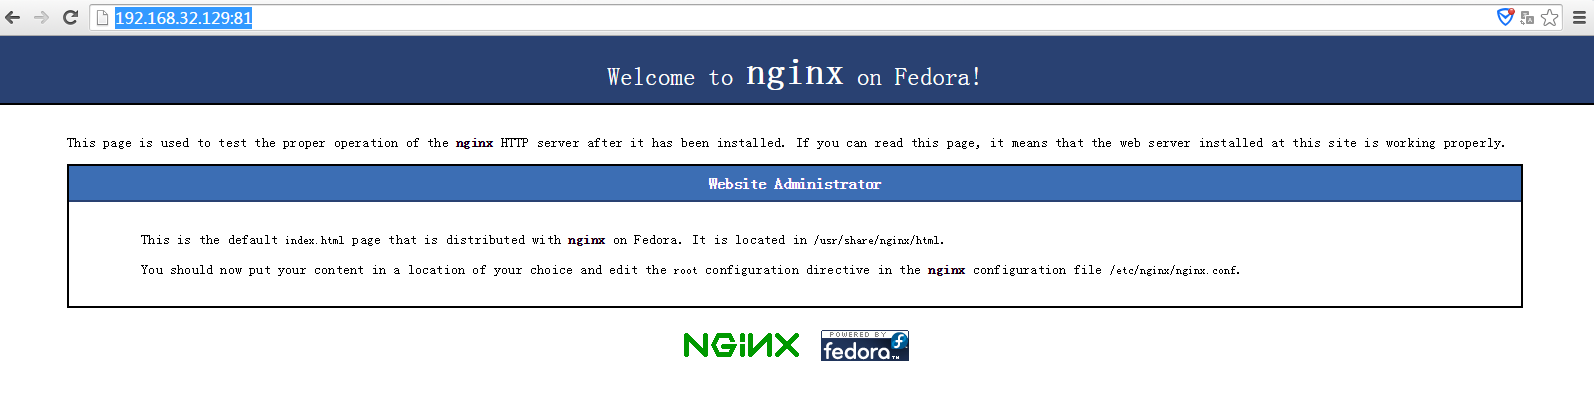 CentOS7 Docker Nginx部署及运行实例分析